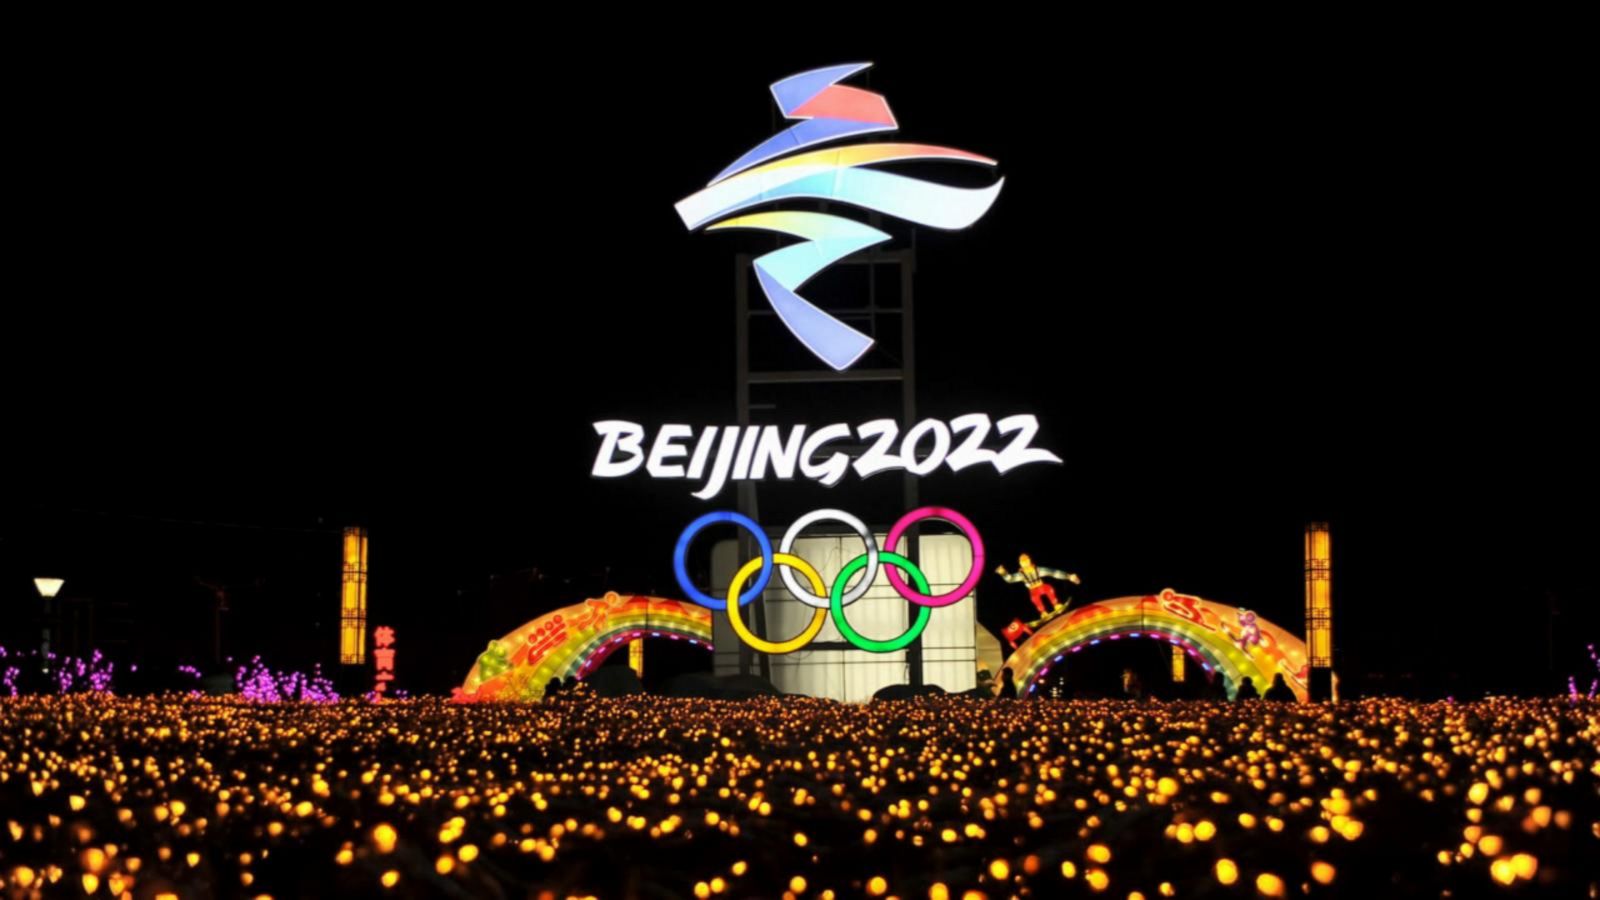 Ahead of 2022 Olympics, views of the U.S. diplomatic boycott